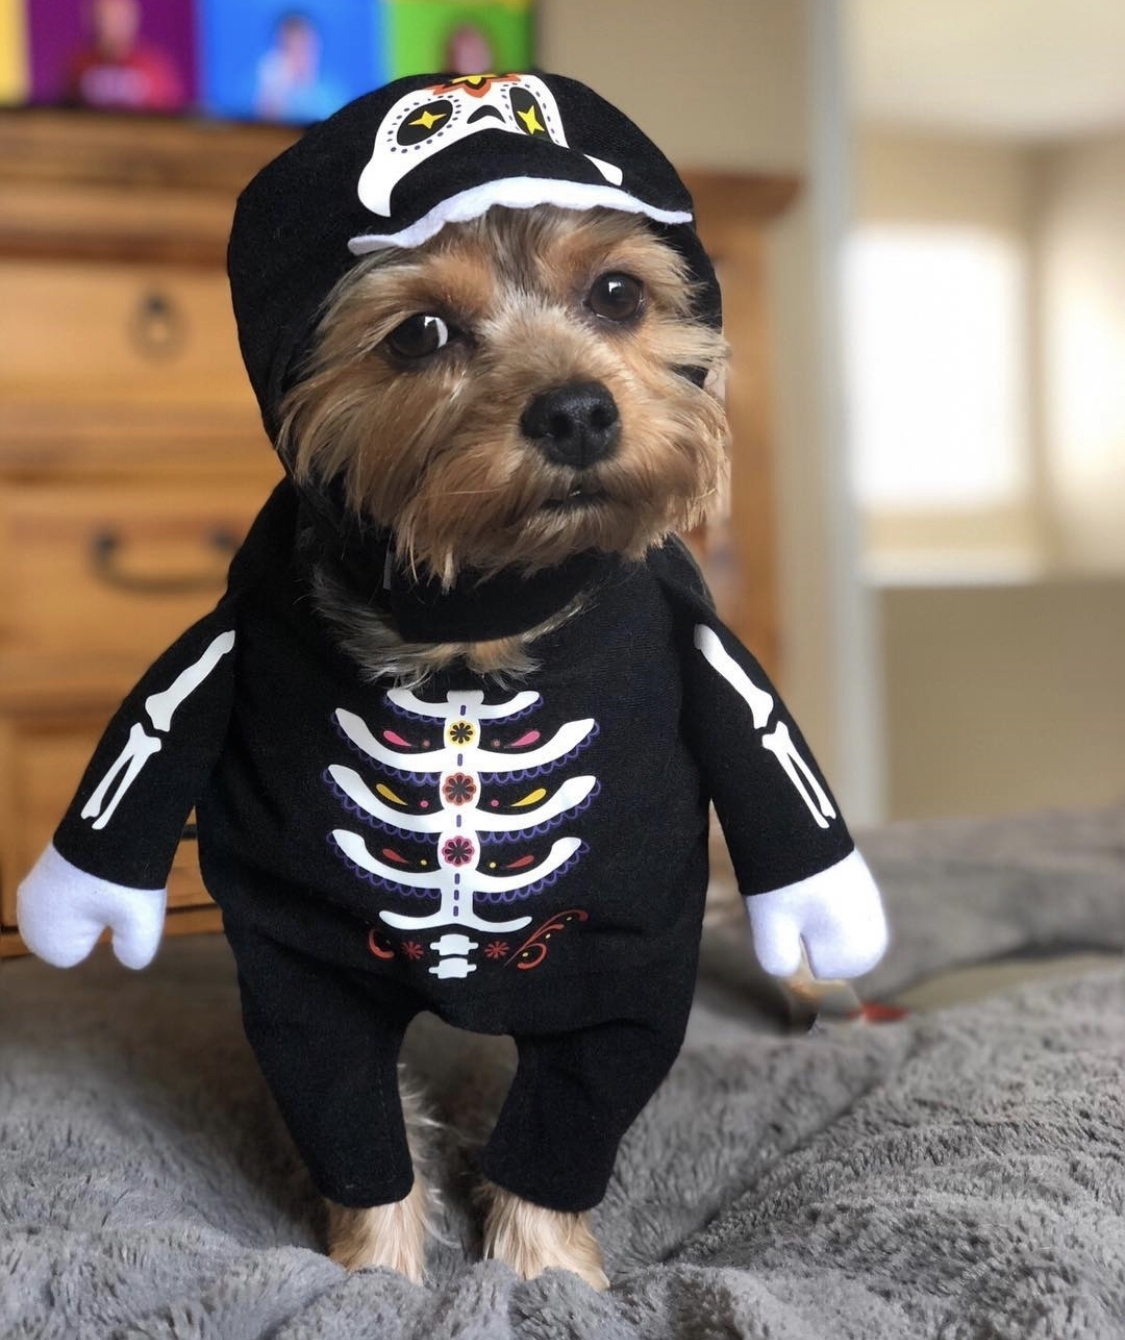 Yorkshire Terrier in skeleton costume